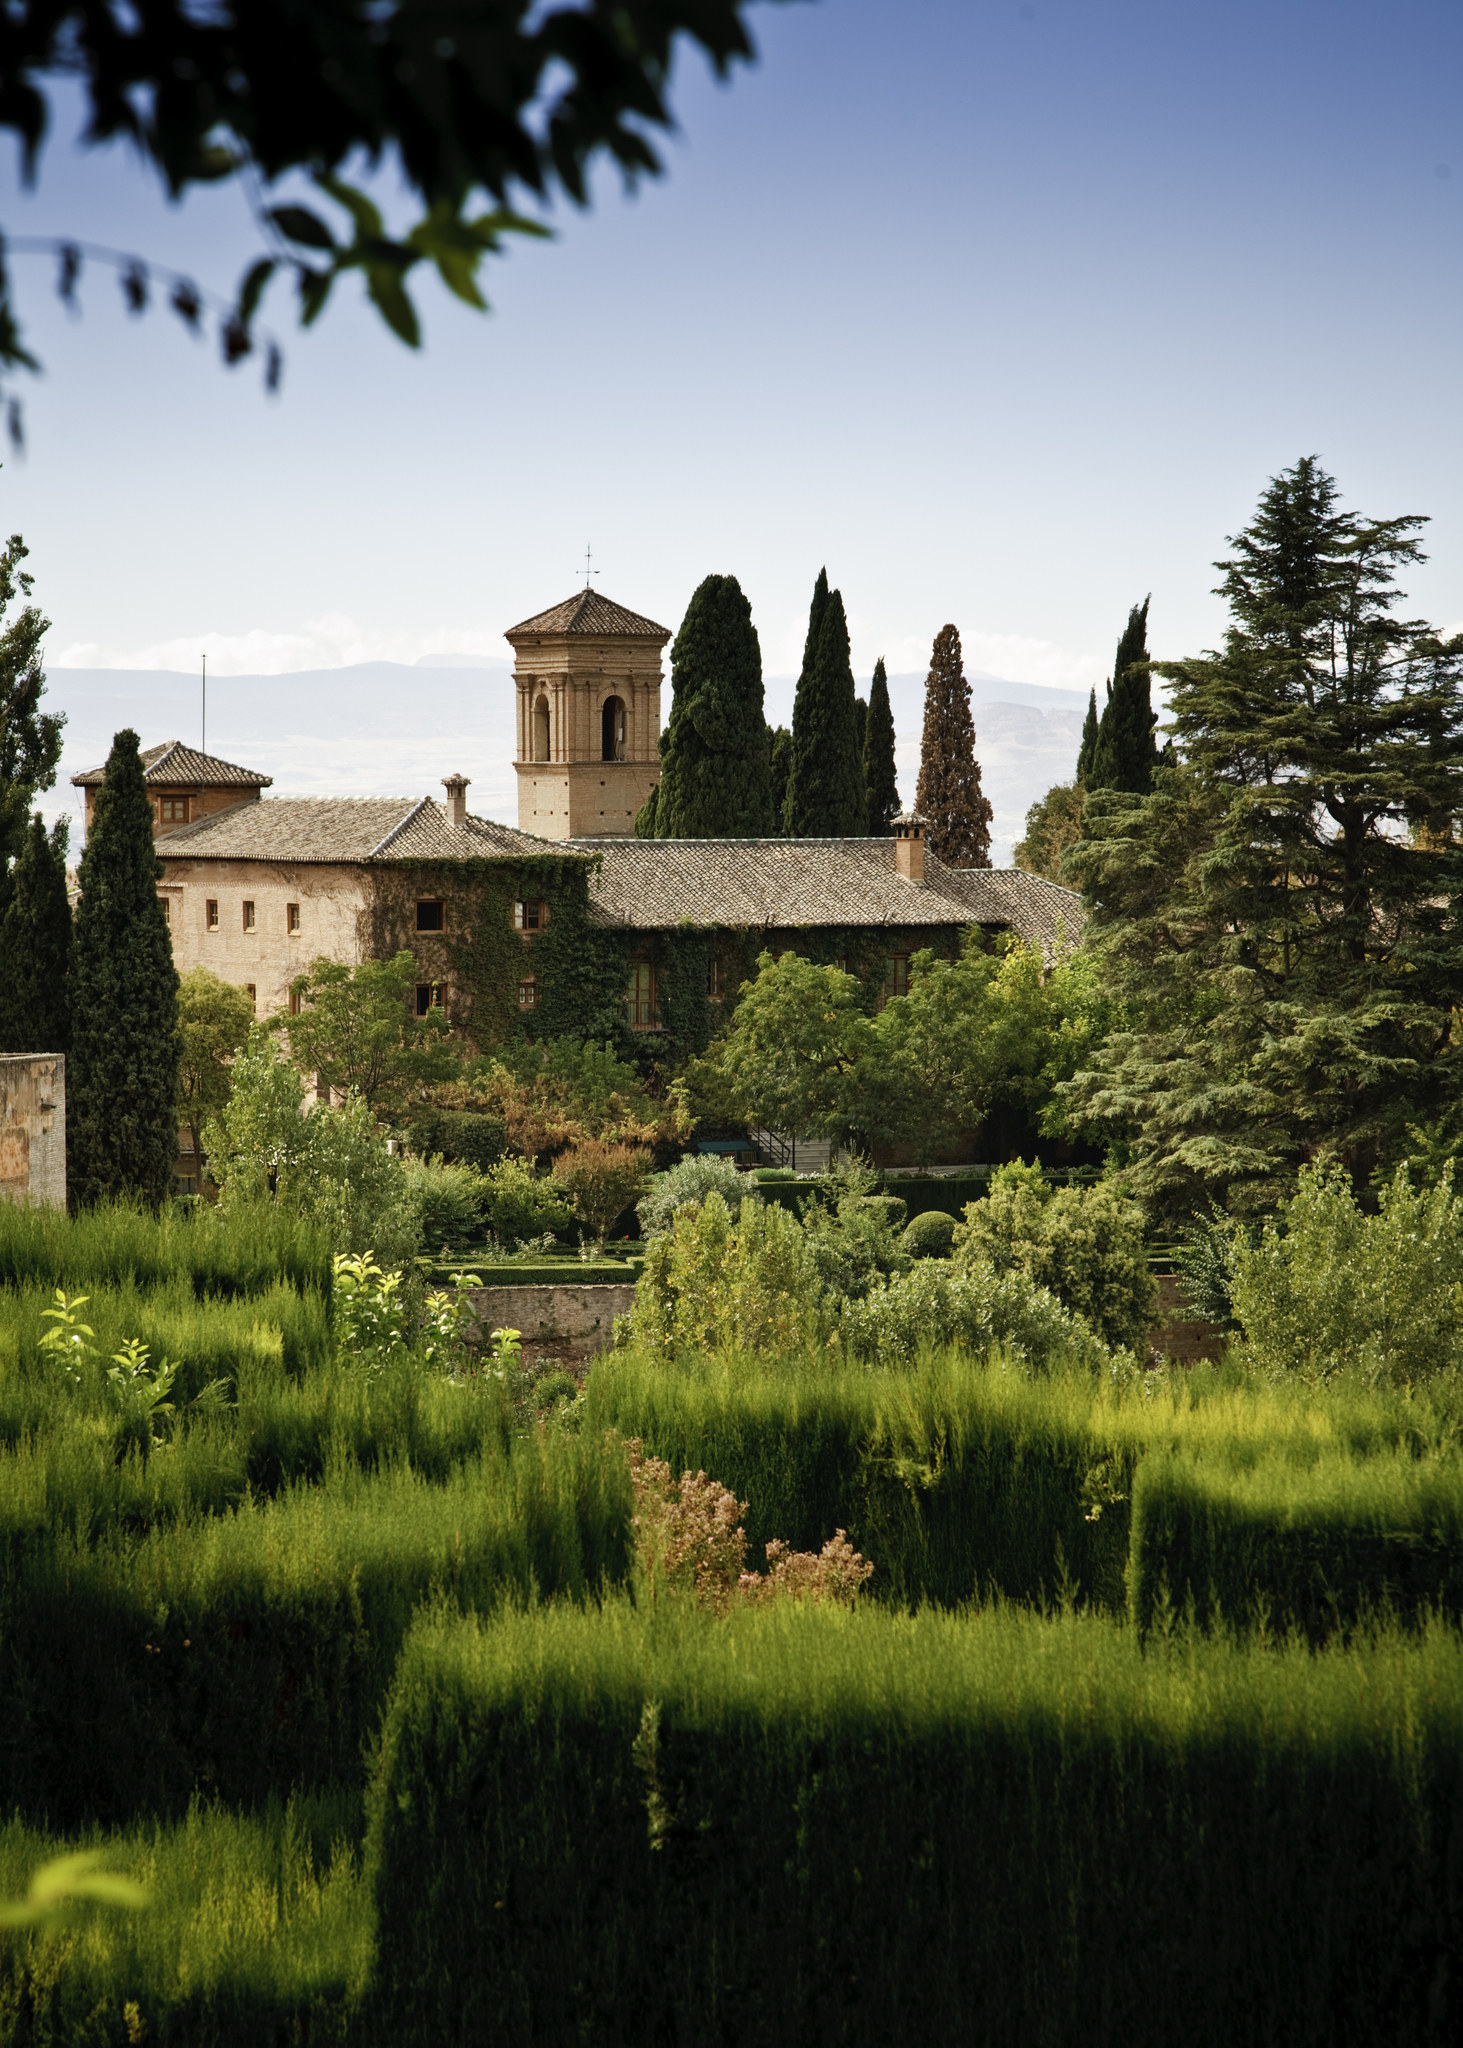 The gardens of Alhambra in Granada.